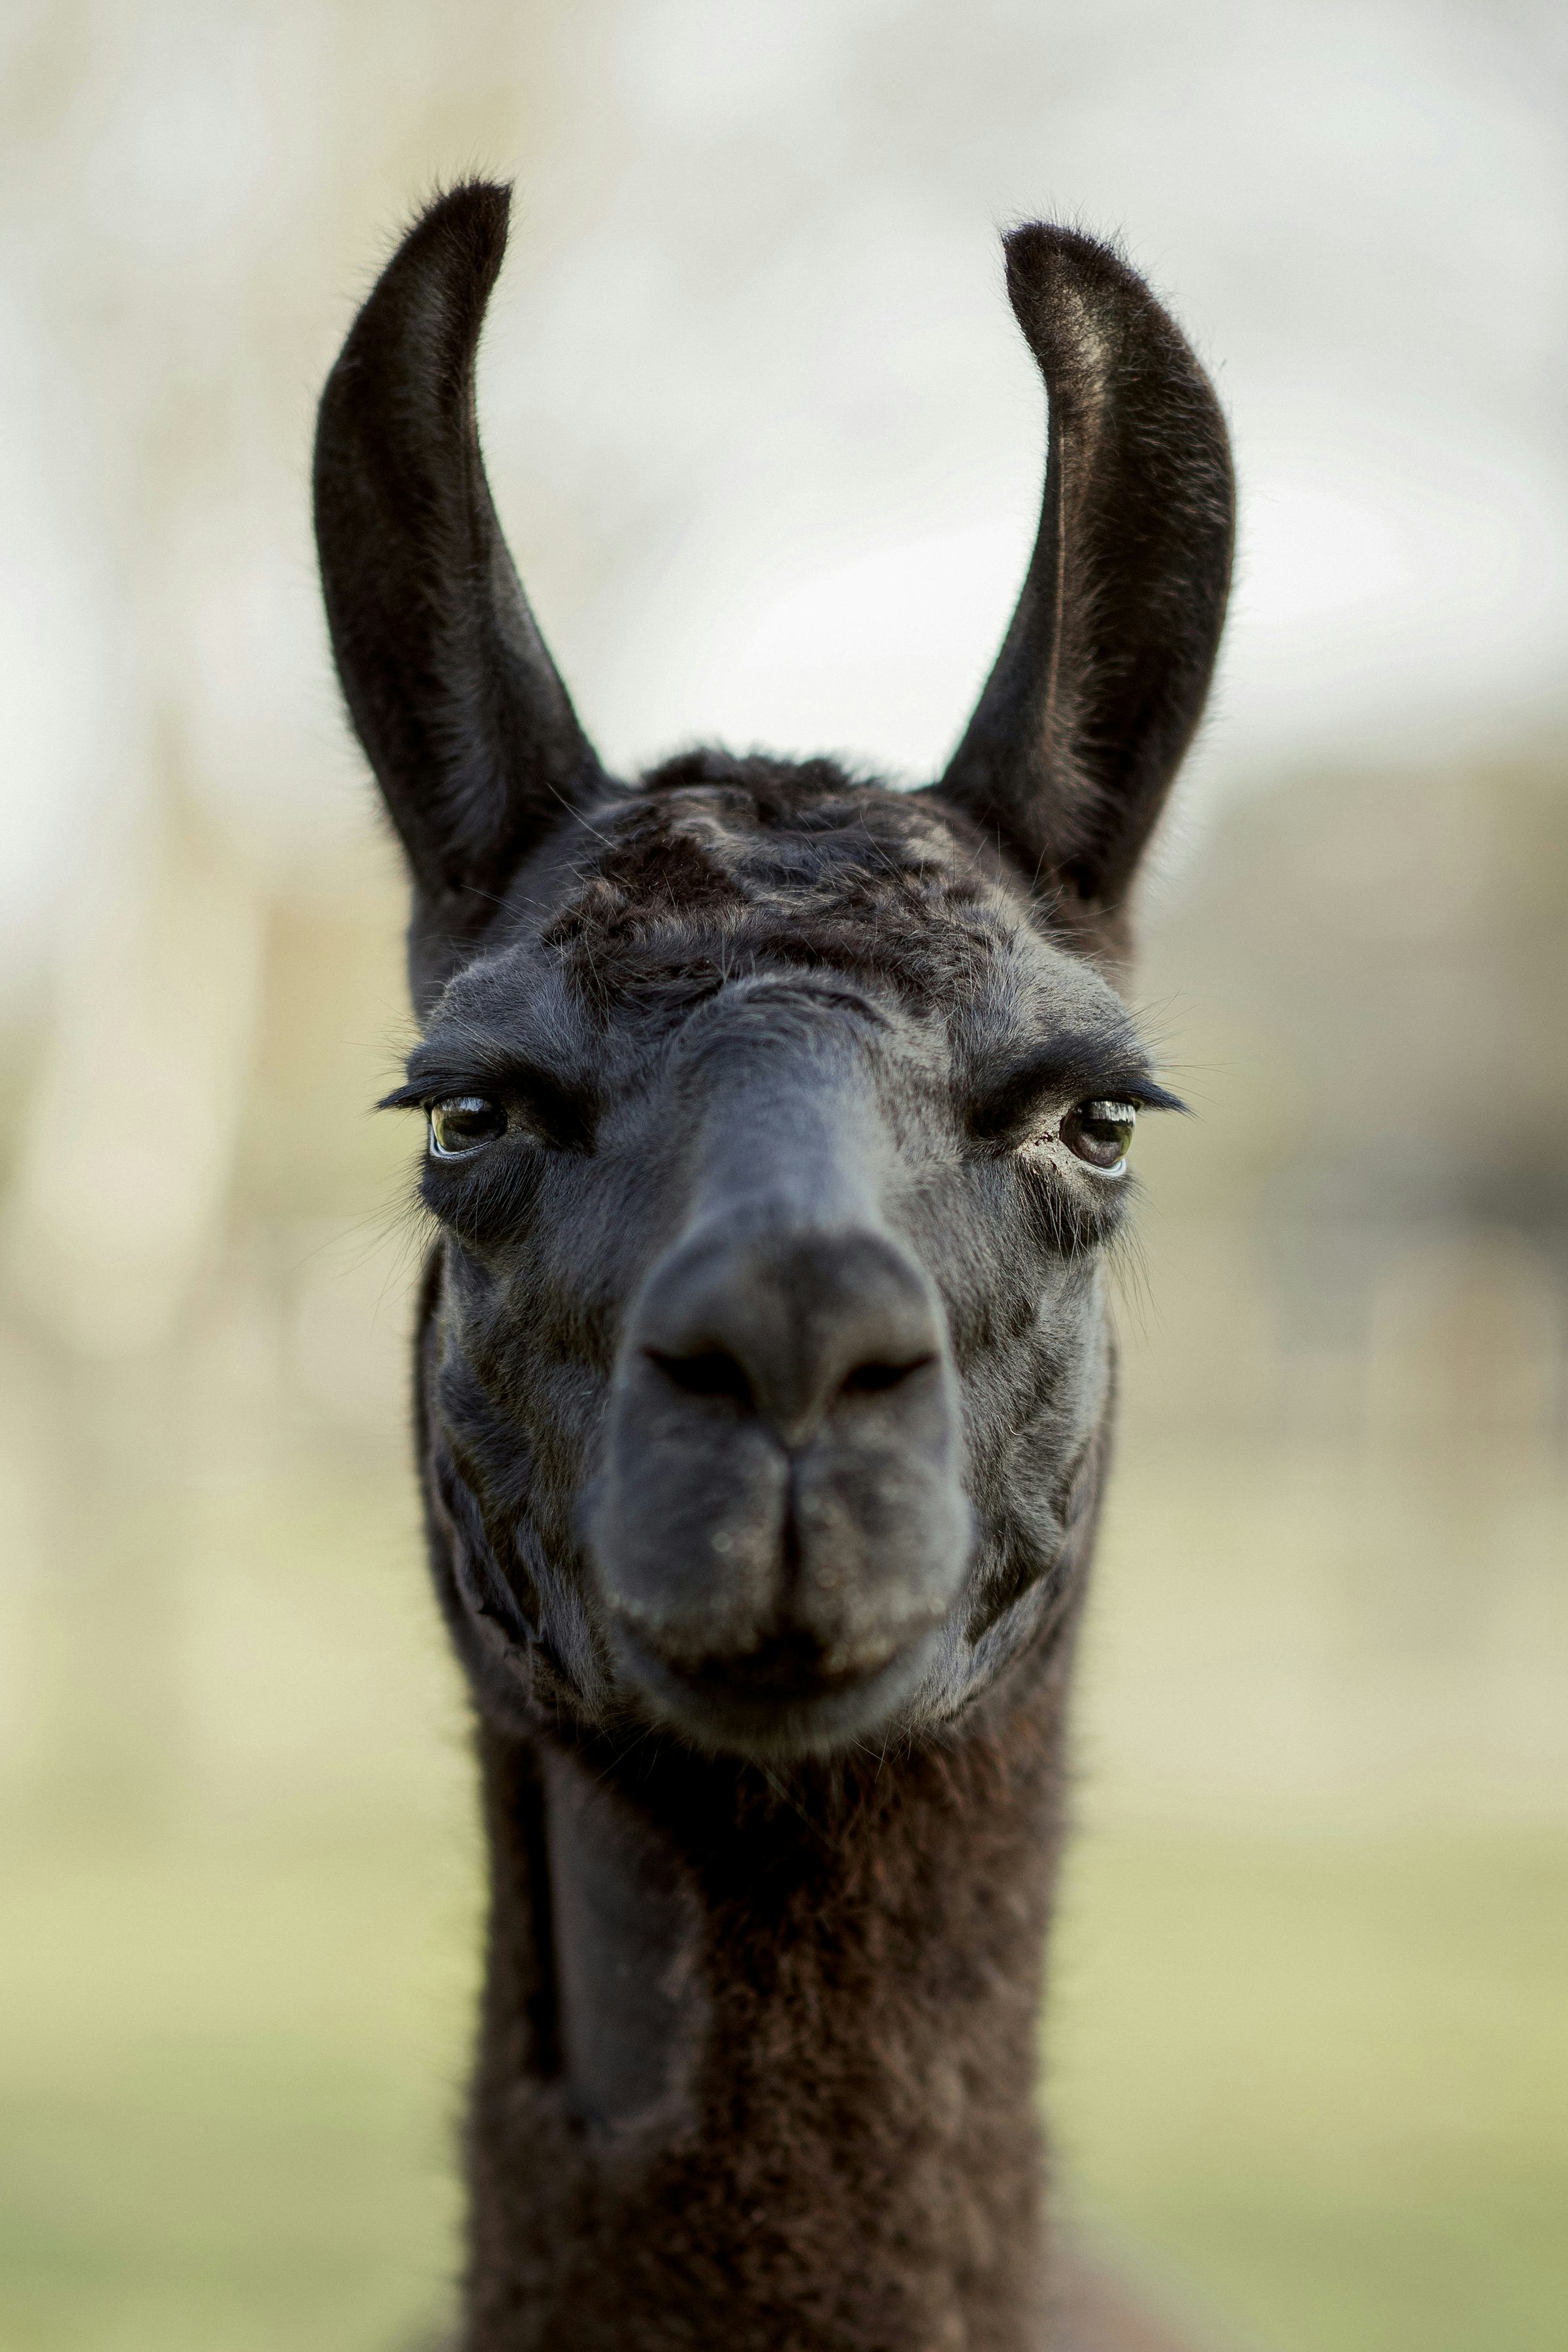 Close-up of a llama's face